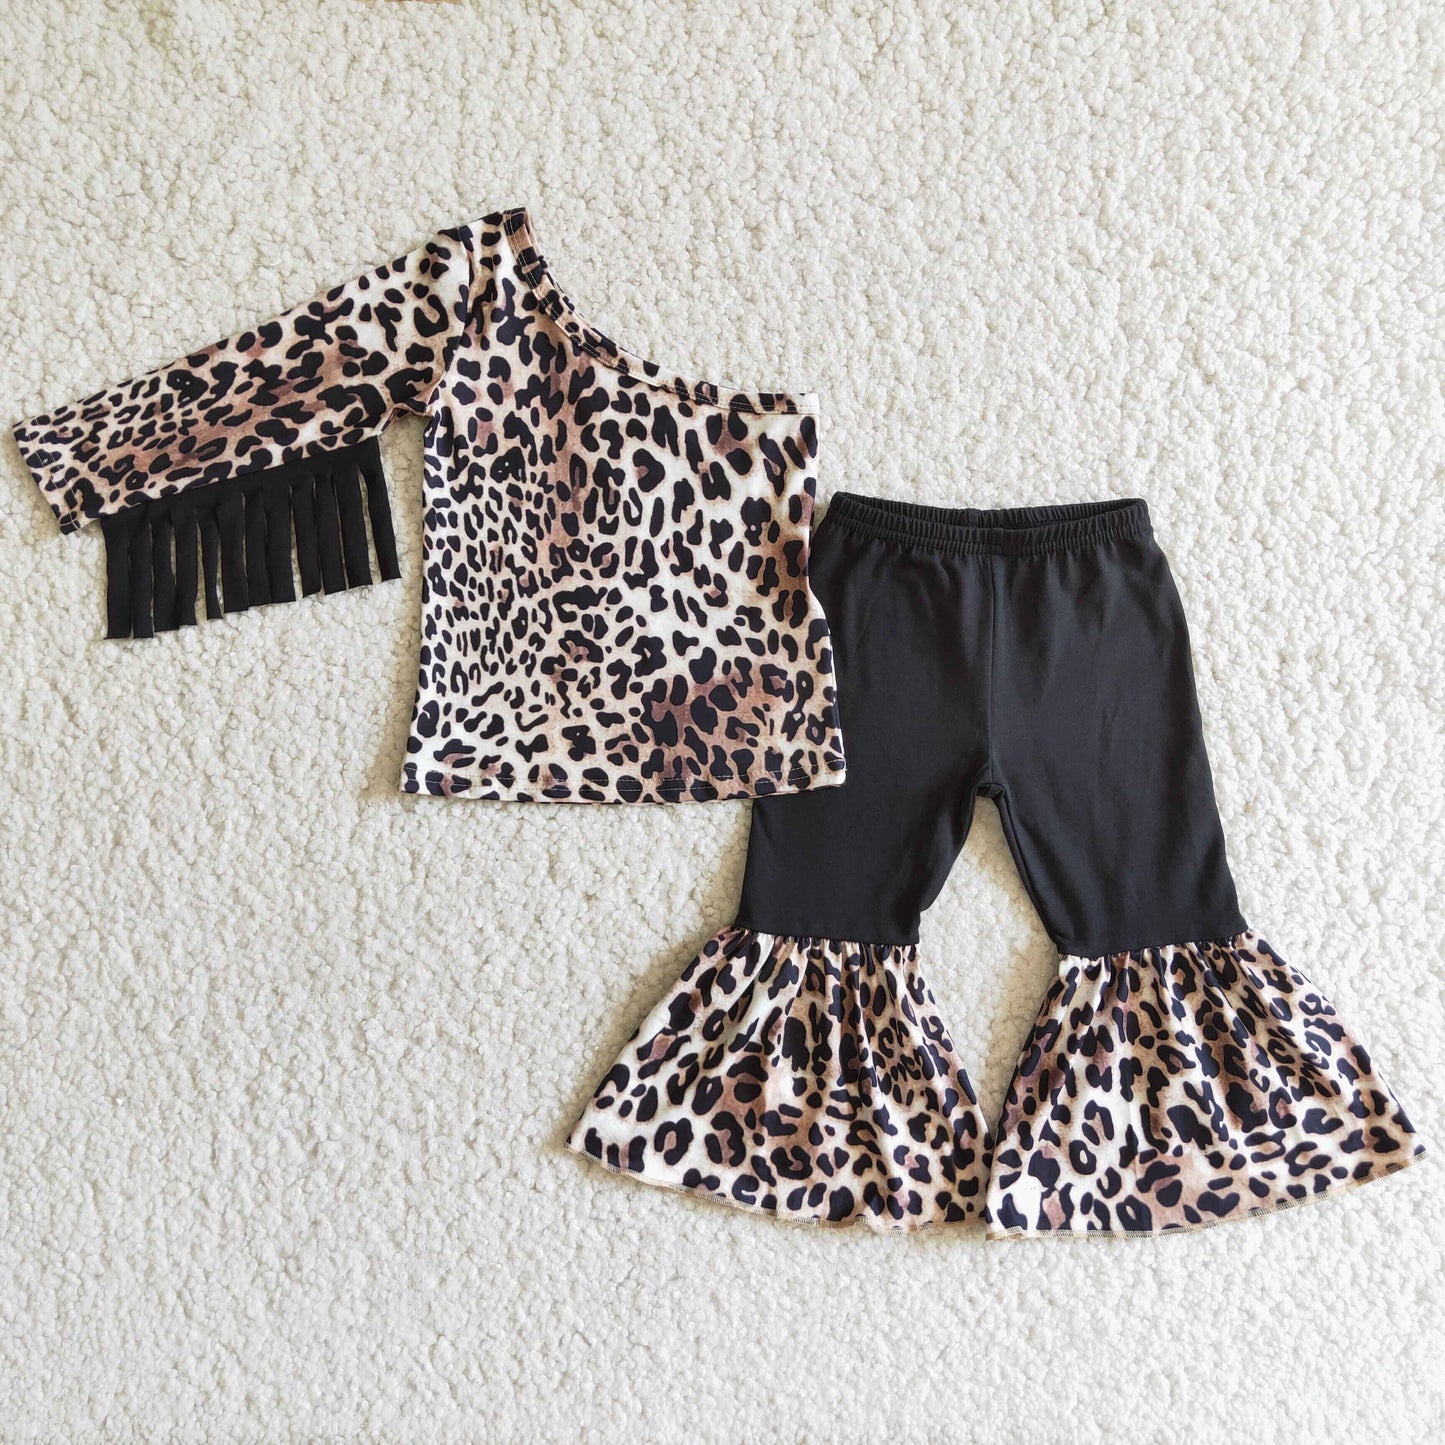 Off shoulder leopard tassels shirt bell bottom pants girls outfits